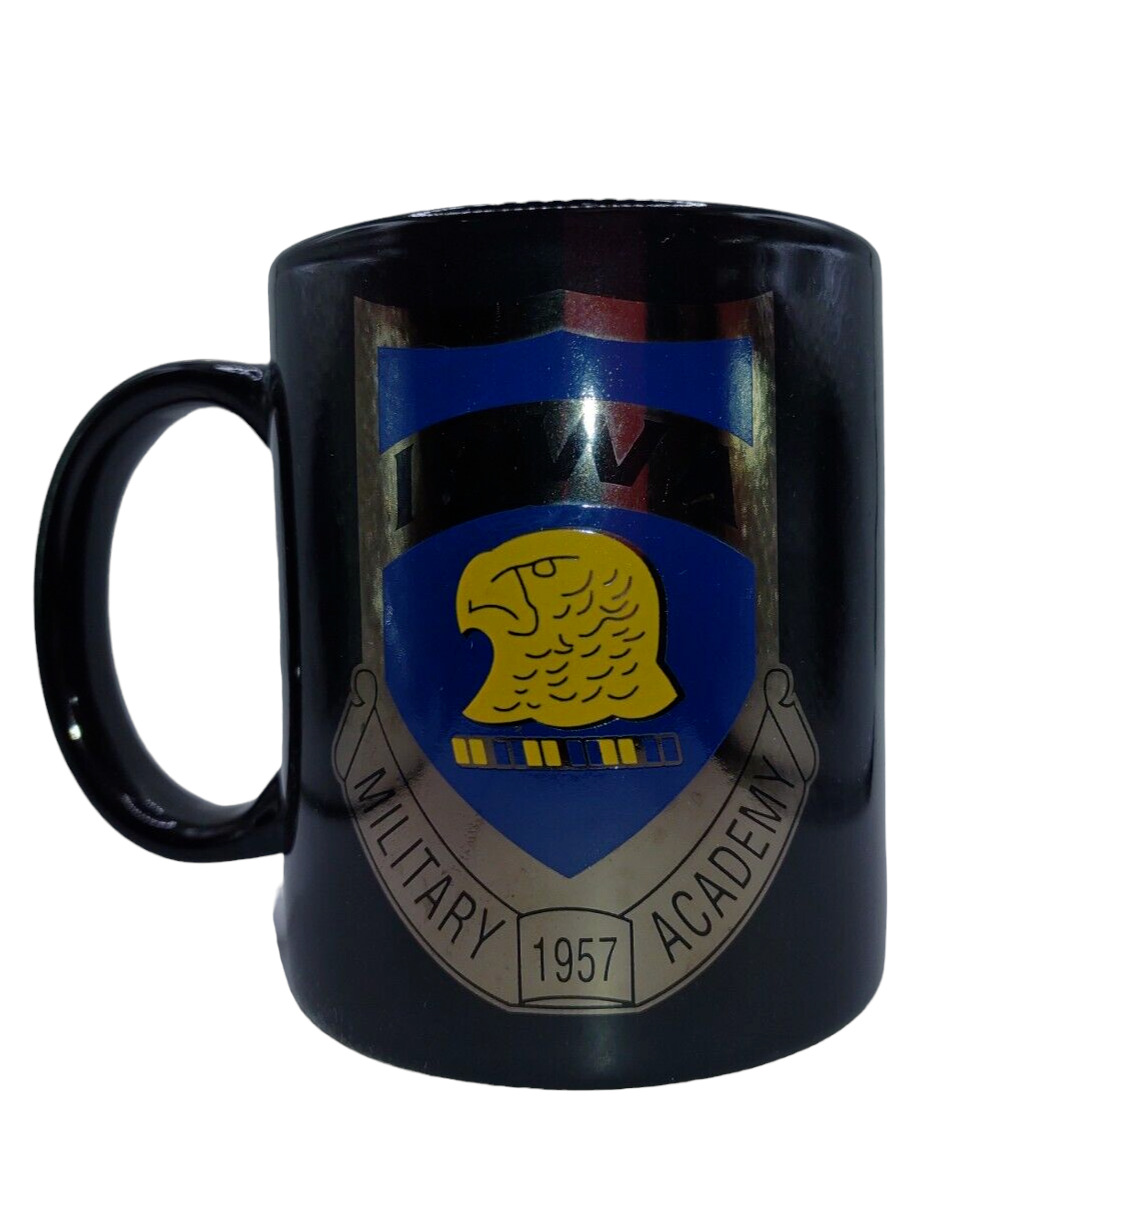 IOWA Military Academy 1957 Eagle Crest National Guard Military Coffee Mug Cup